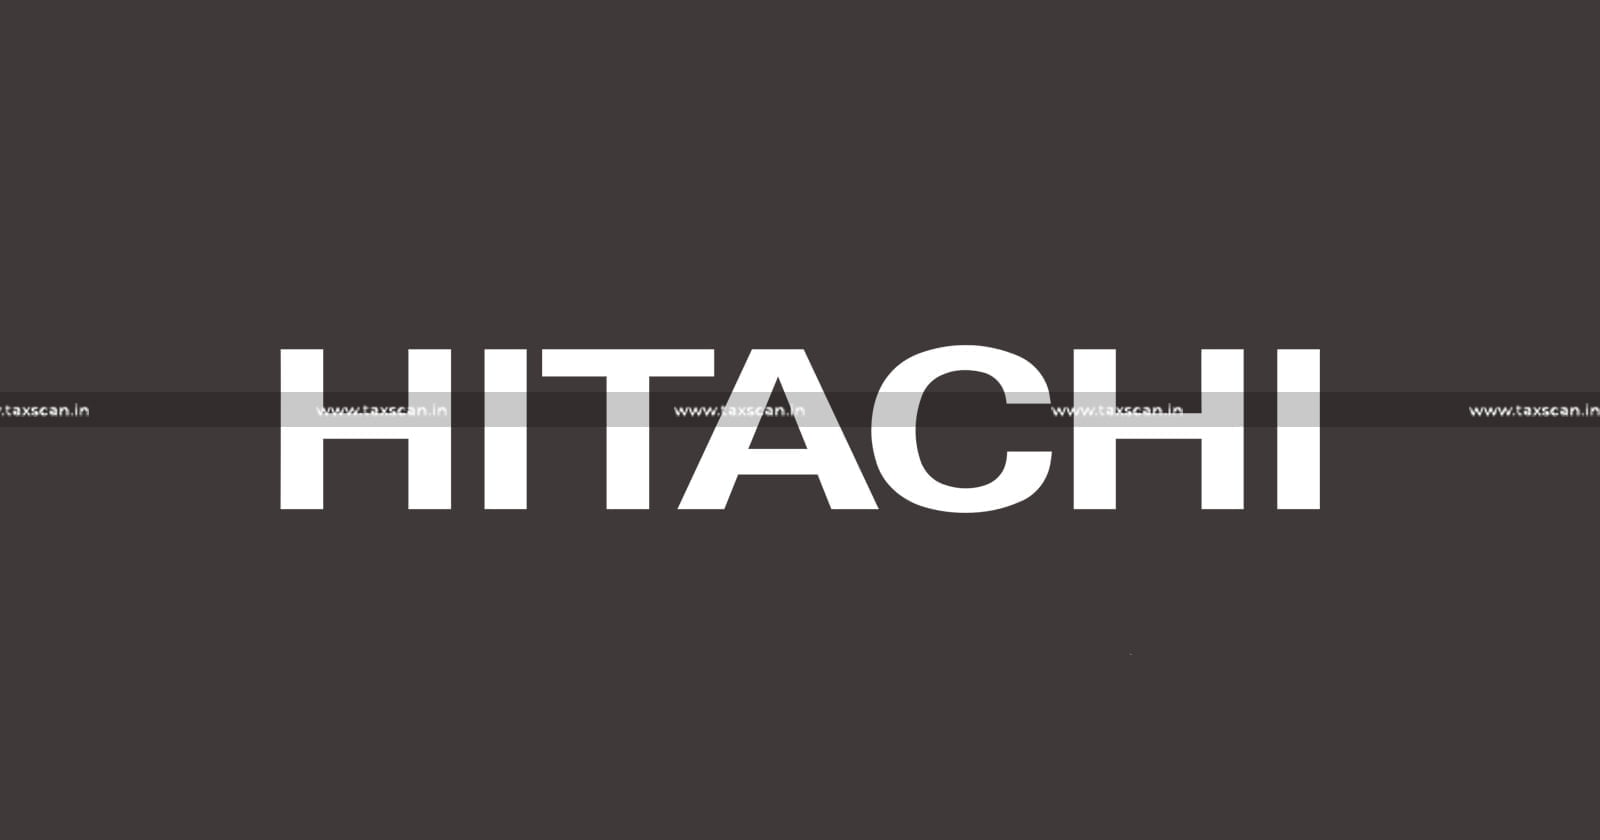 MBA Vacancy in Hitachi - B. com Vacancy in Hitachi - Jobscan - taxscan